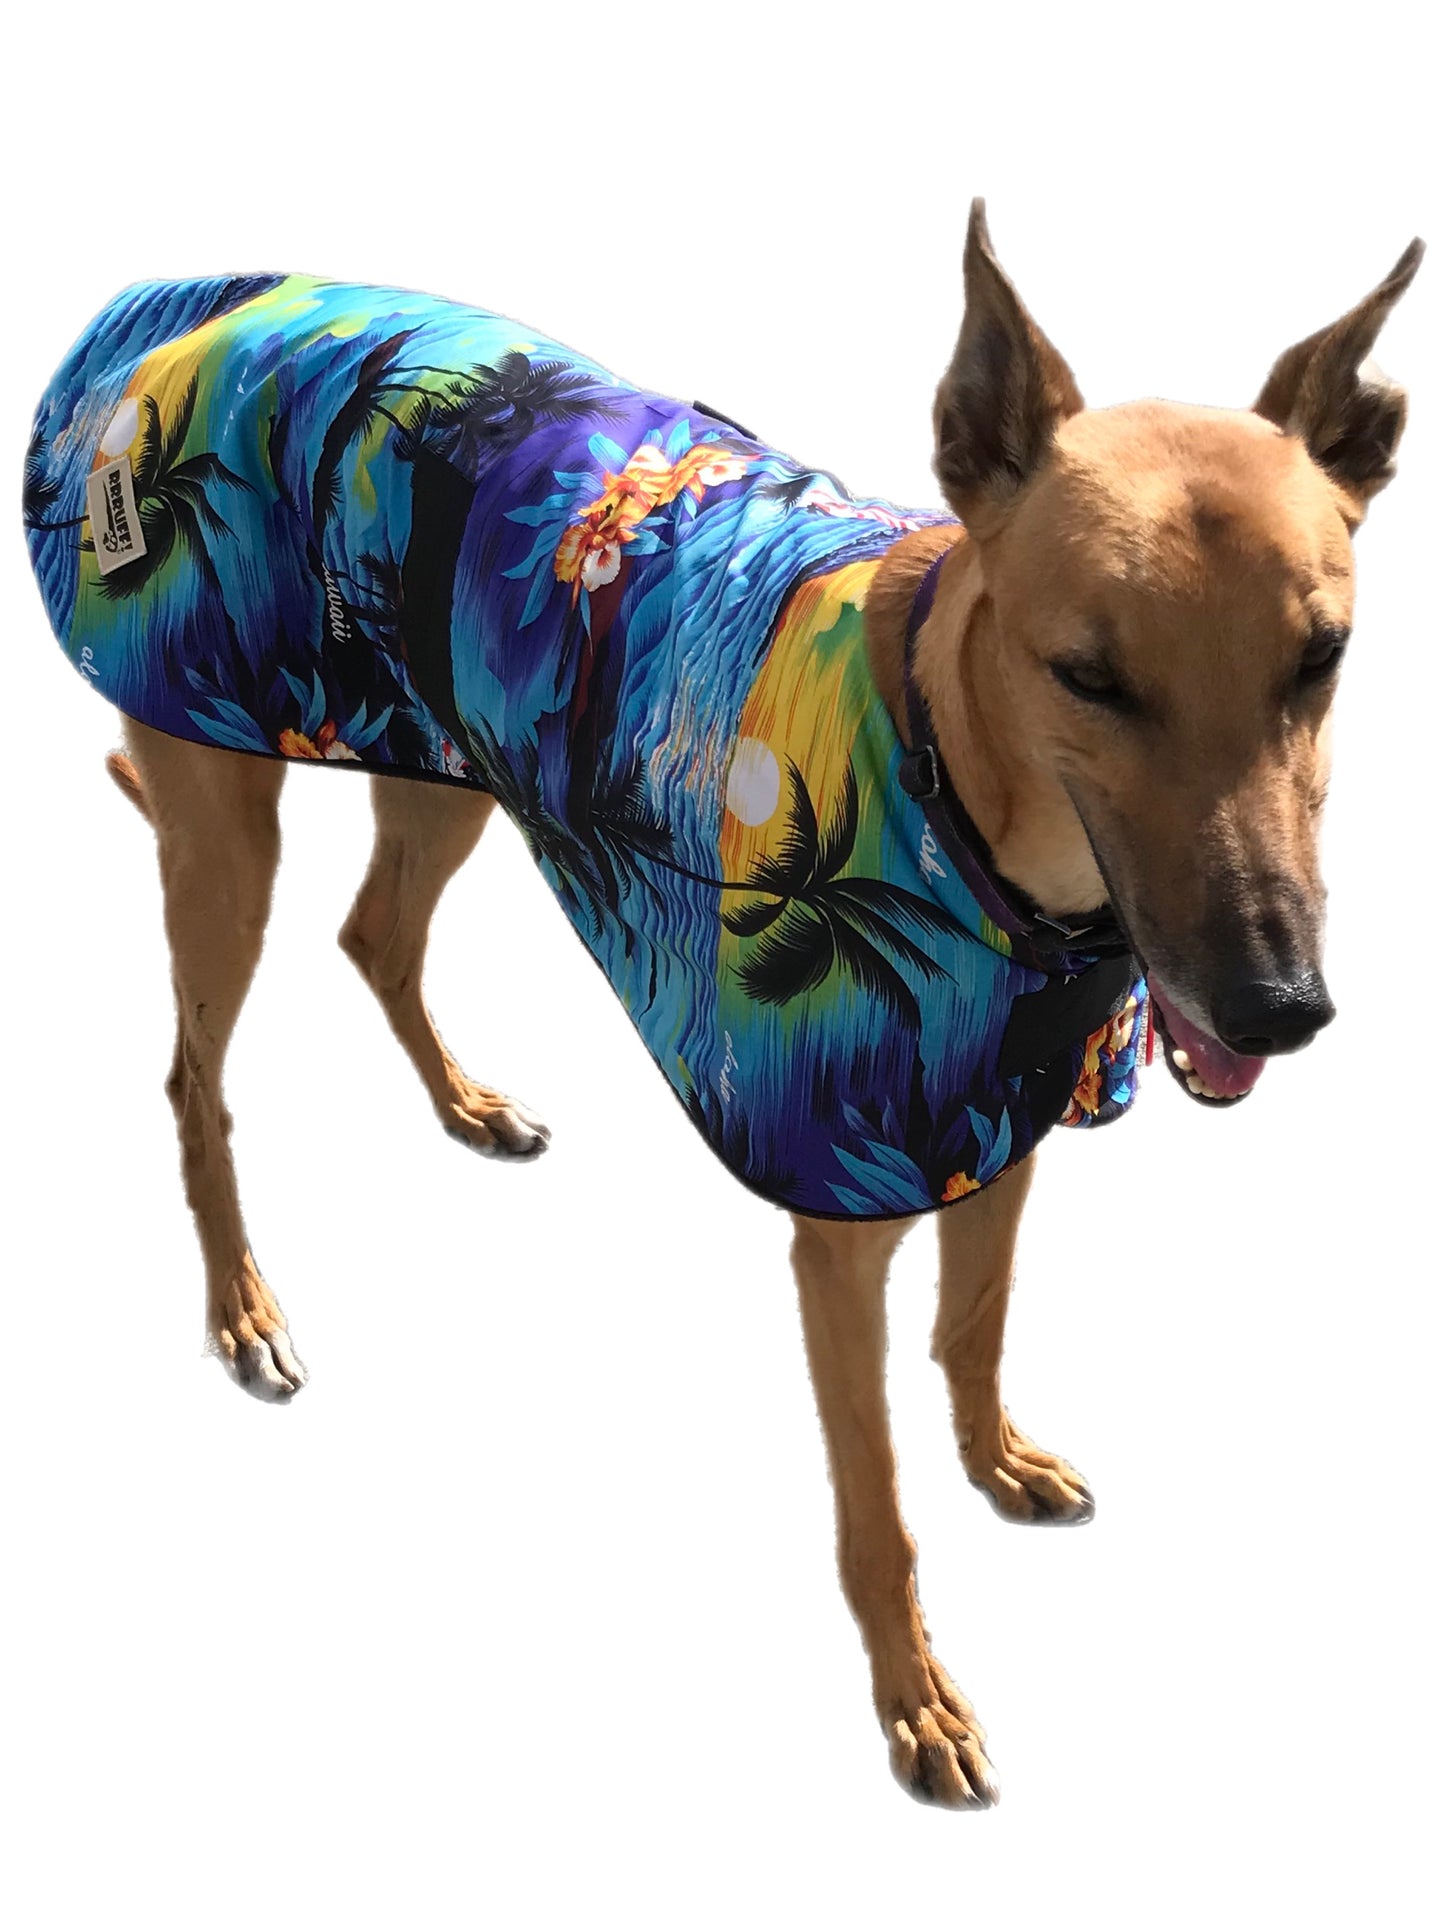 Aloha! Spring range classic style Greyhound coat in lightweight cotton & fleece washable